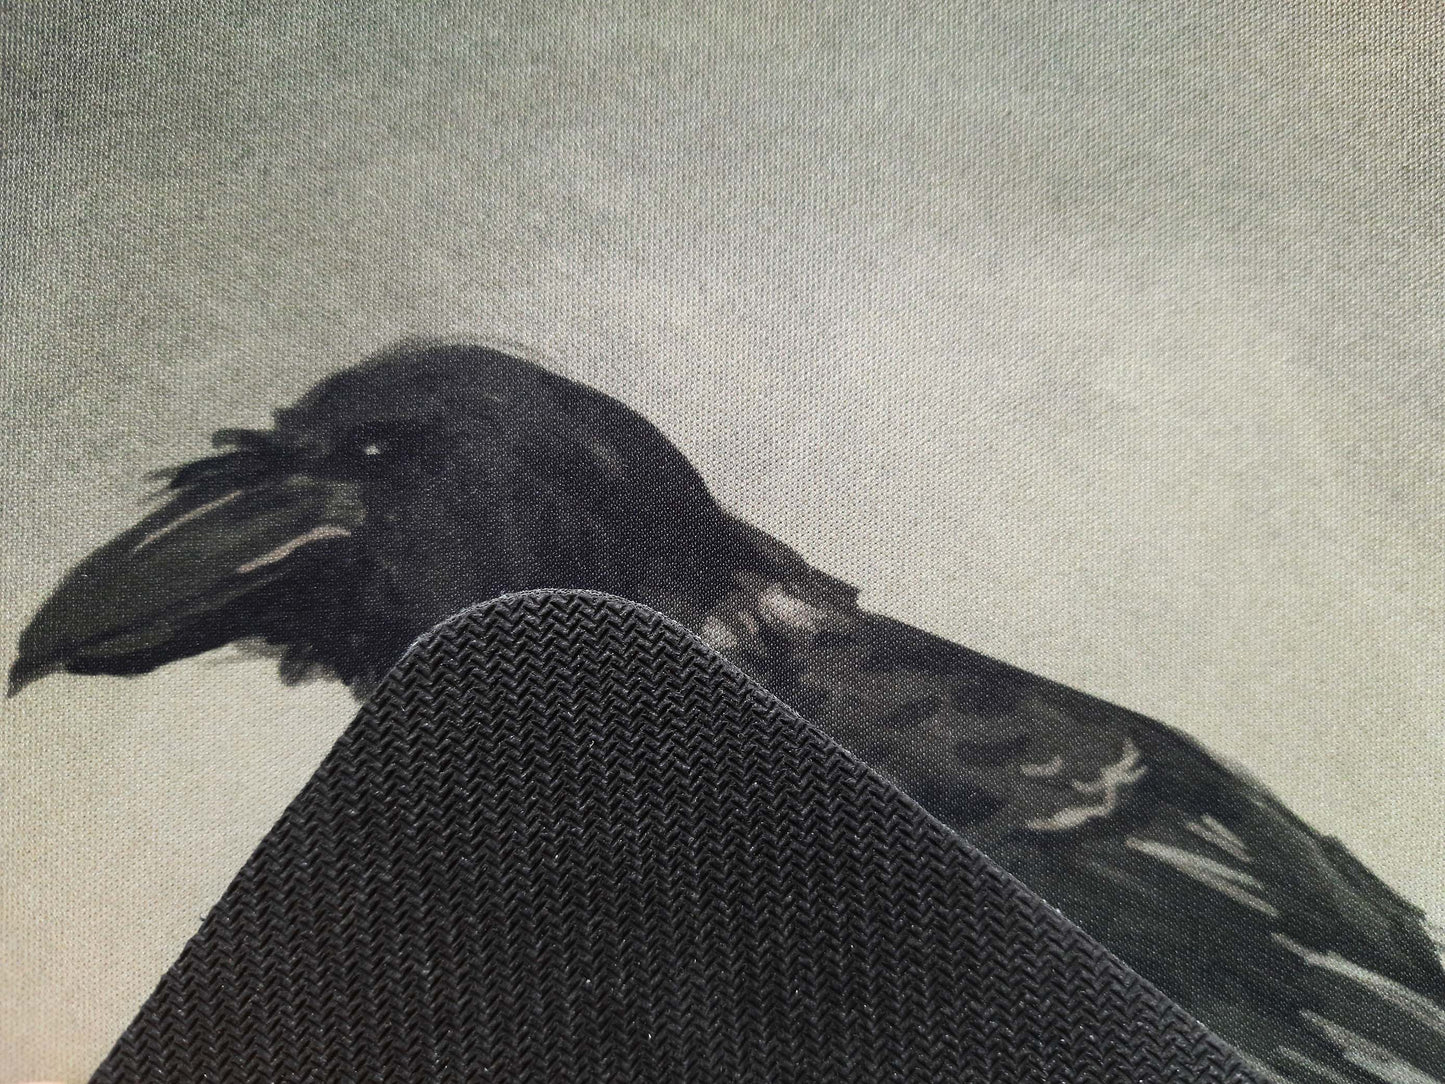 Mousepad textile "Raven"